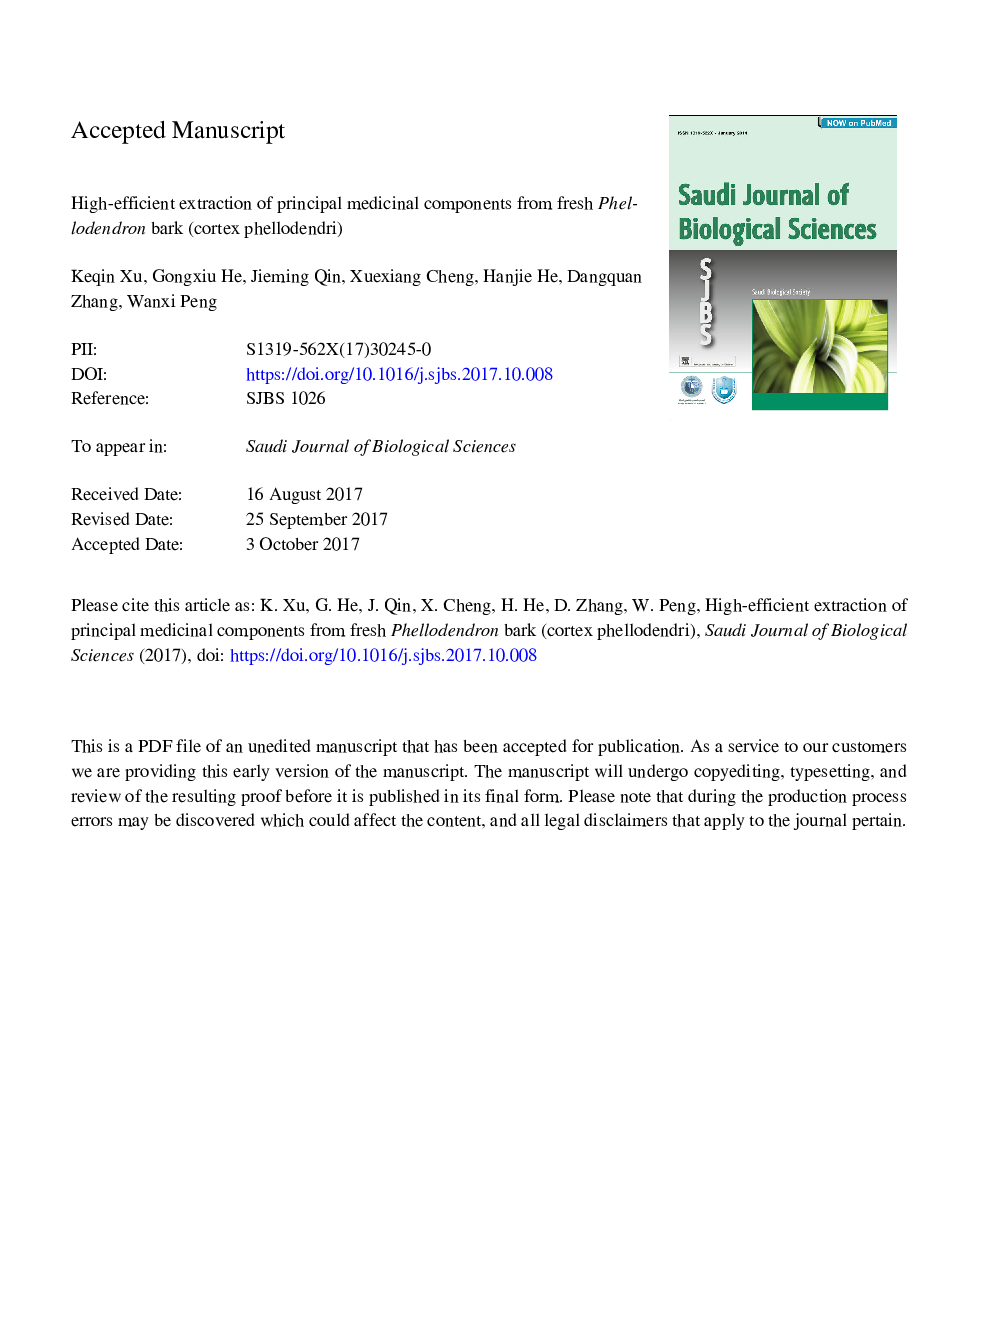 High-efficient extraction of principal medicinal components from fresh Phellodendron bark (cortex phellodendri)